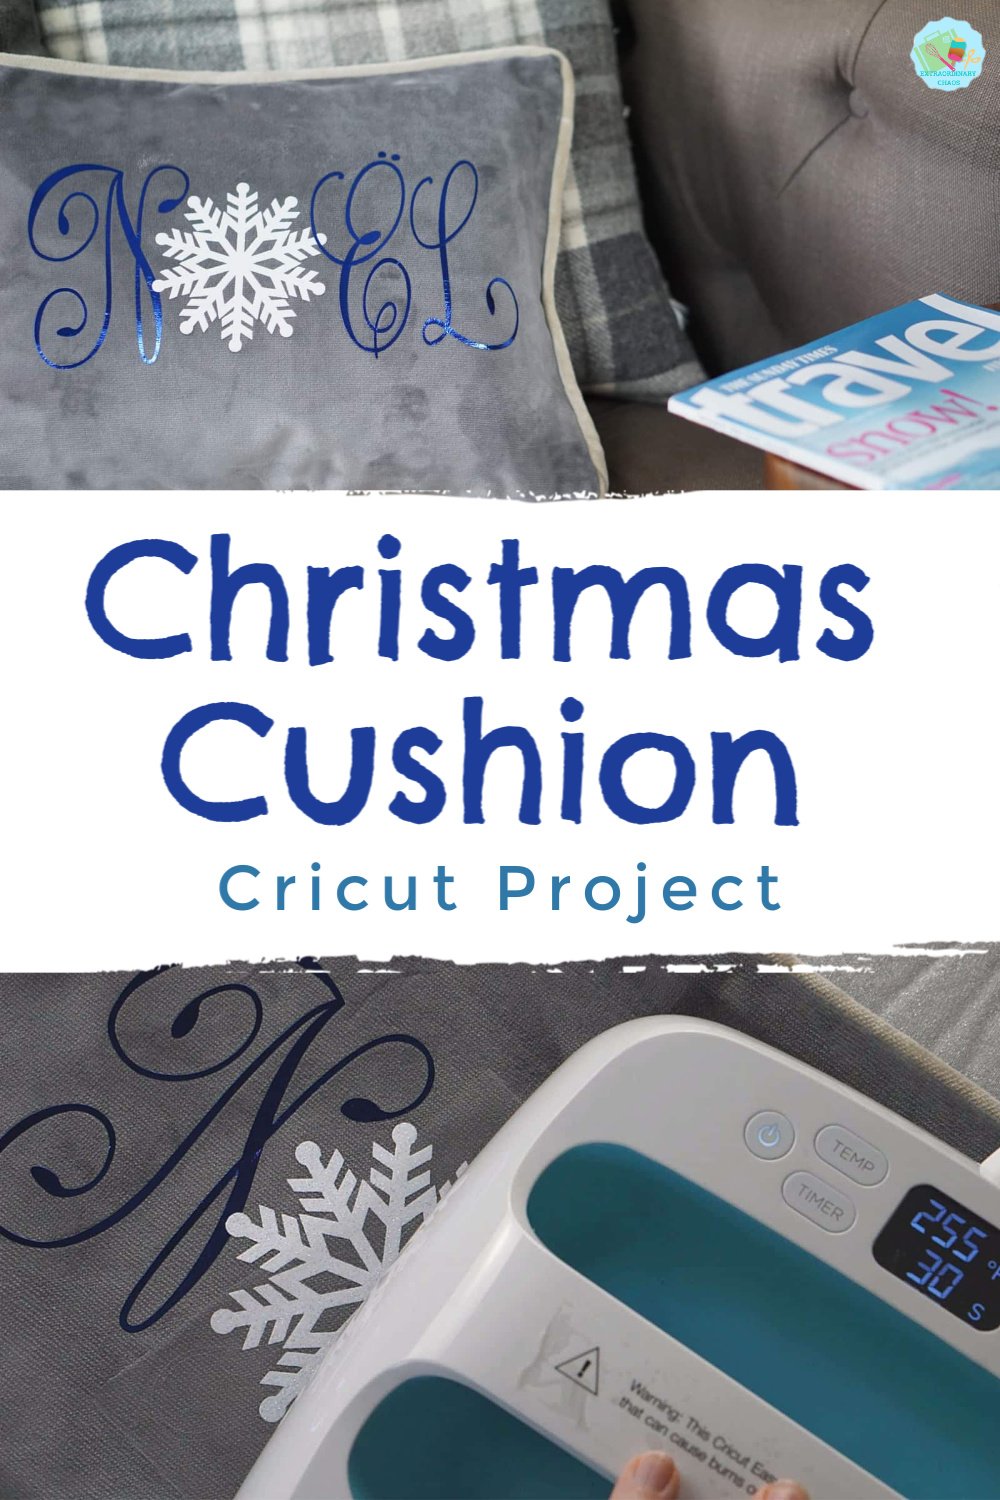 How to make a Christmas Cushion with Cricut